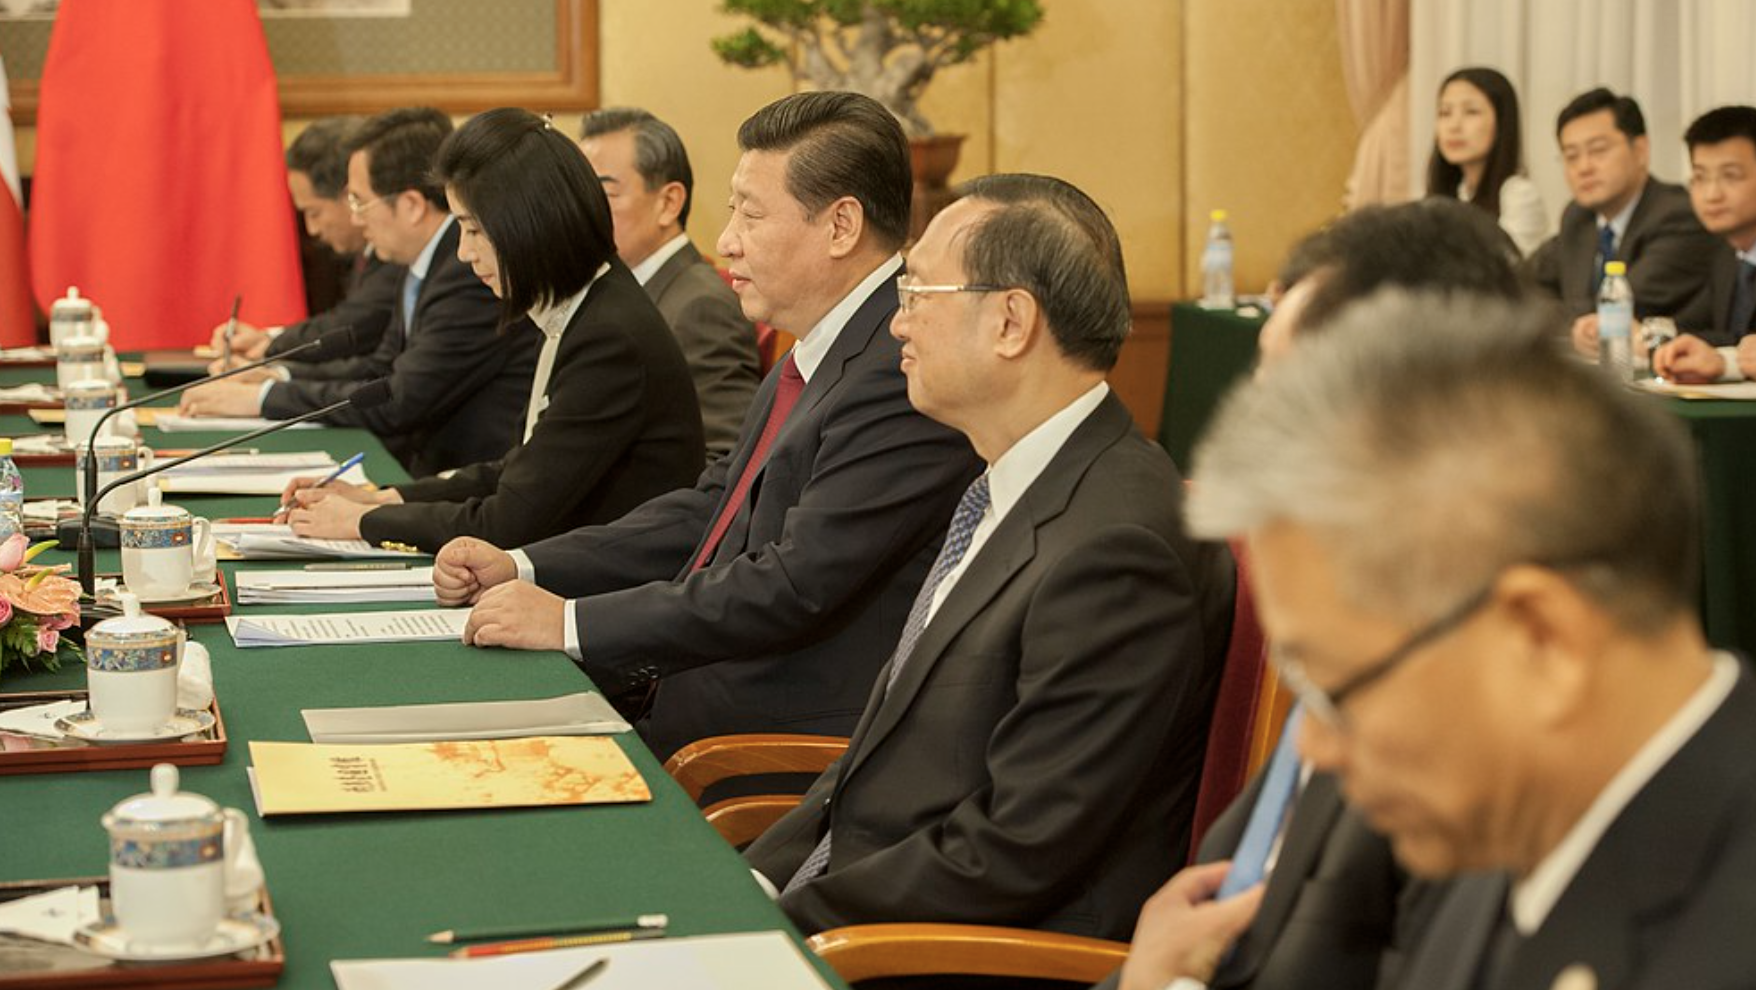 President Xi Jinping of China, at meeting